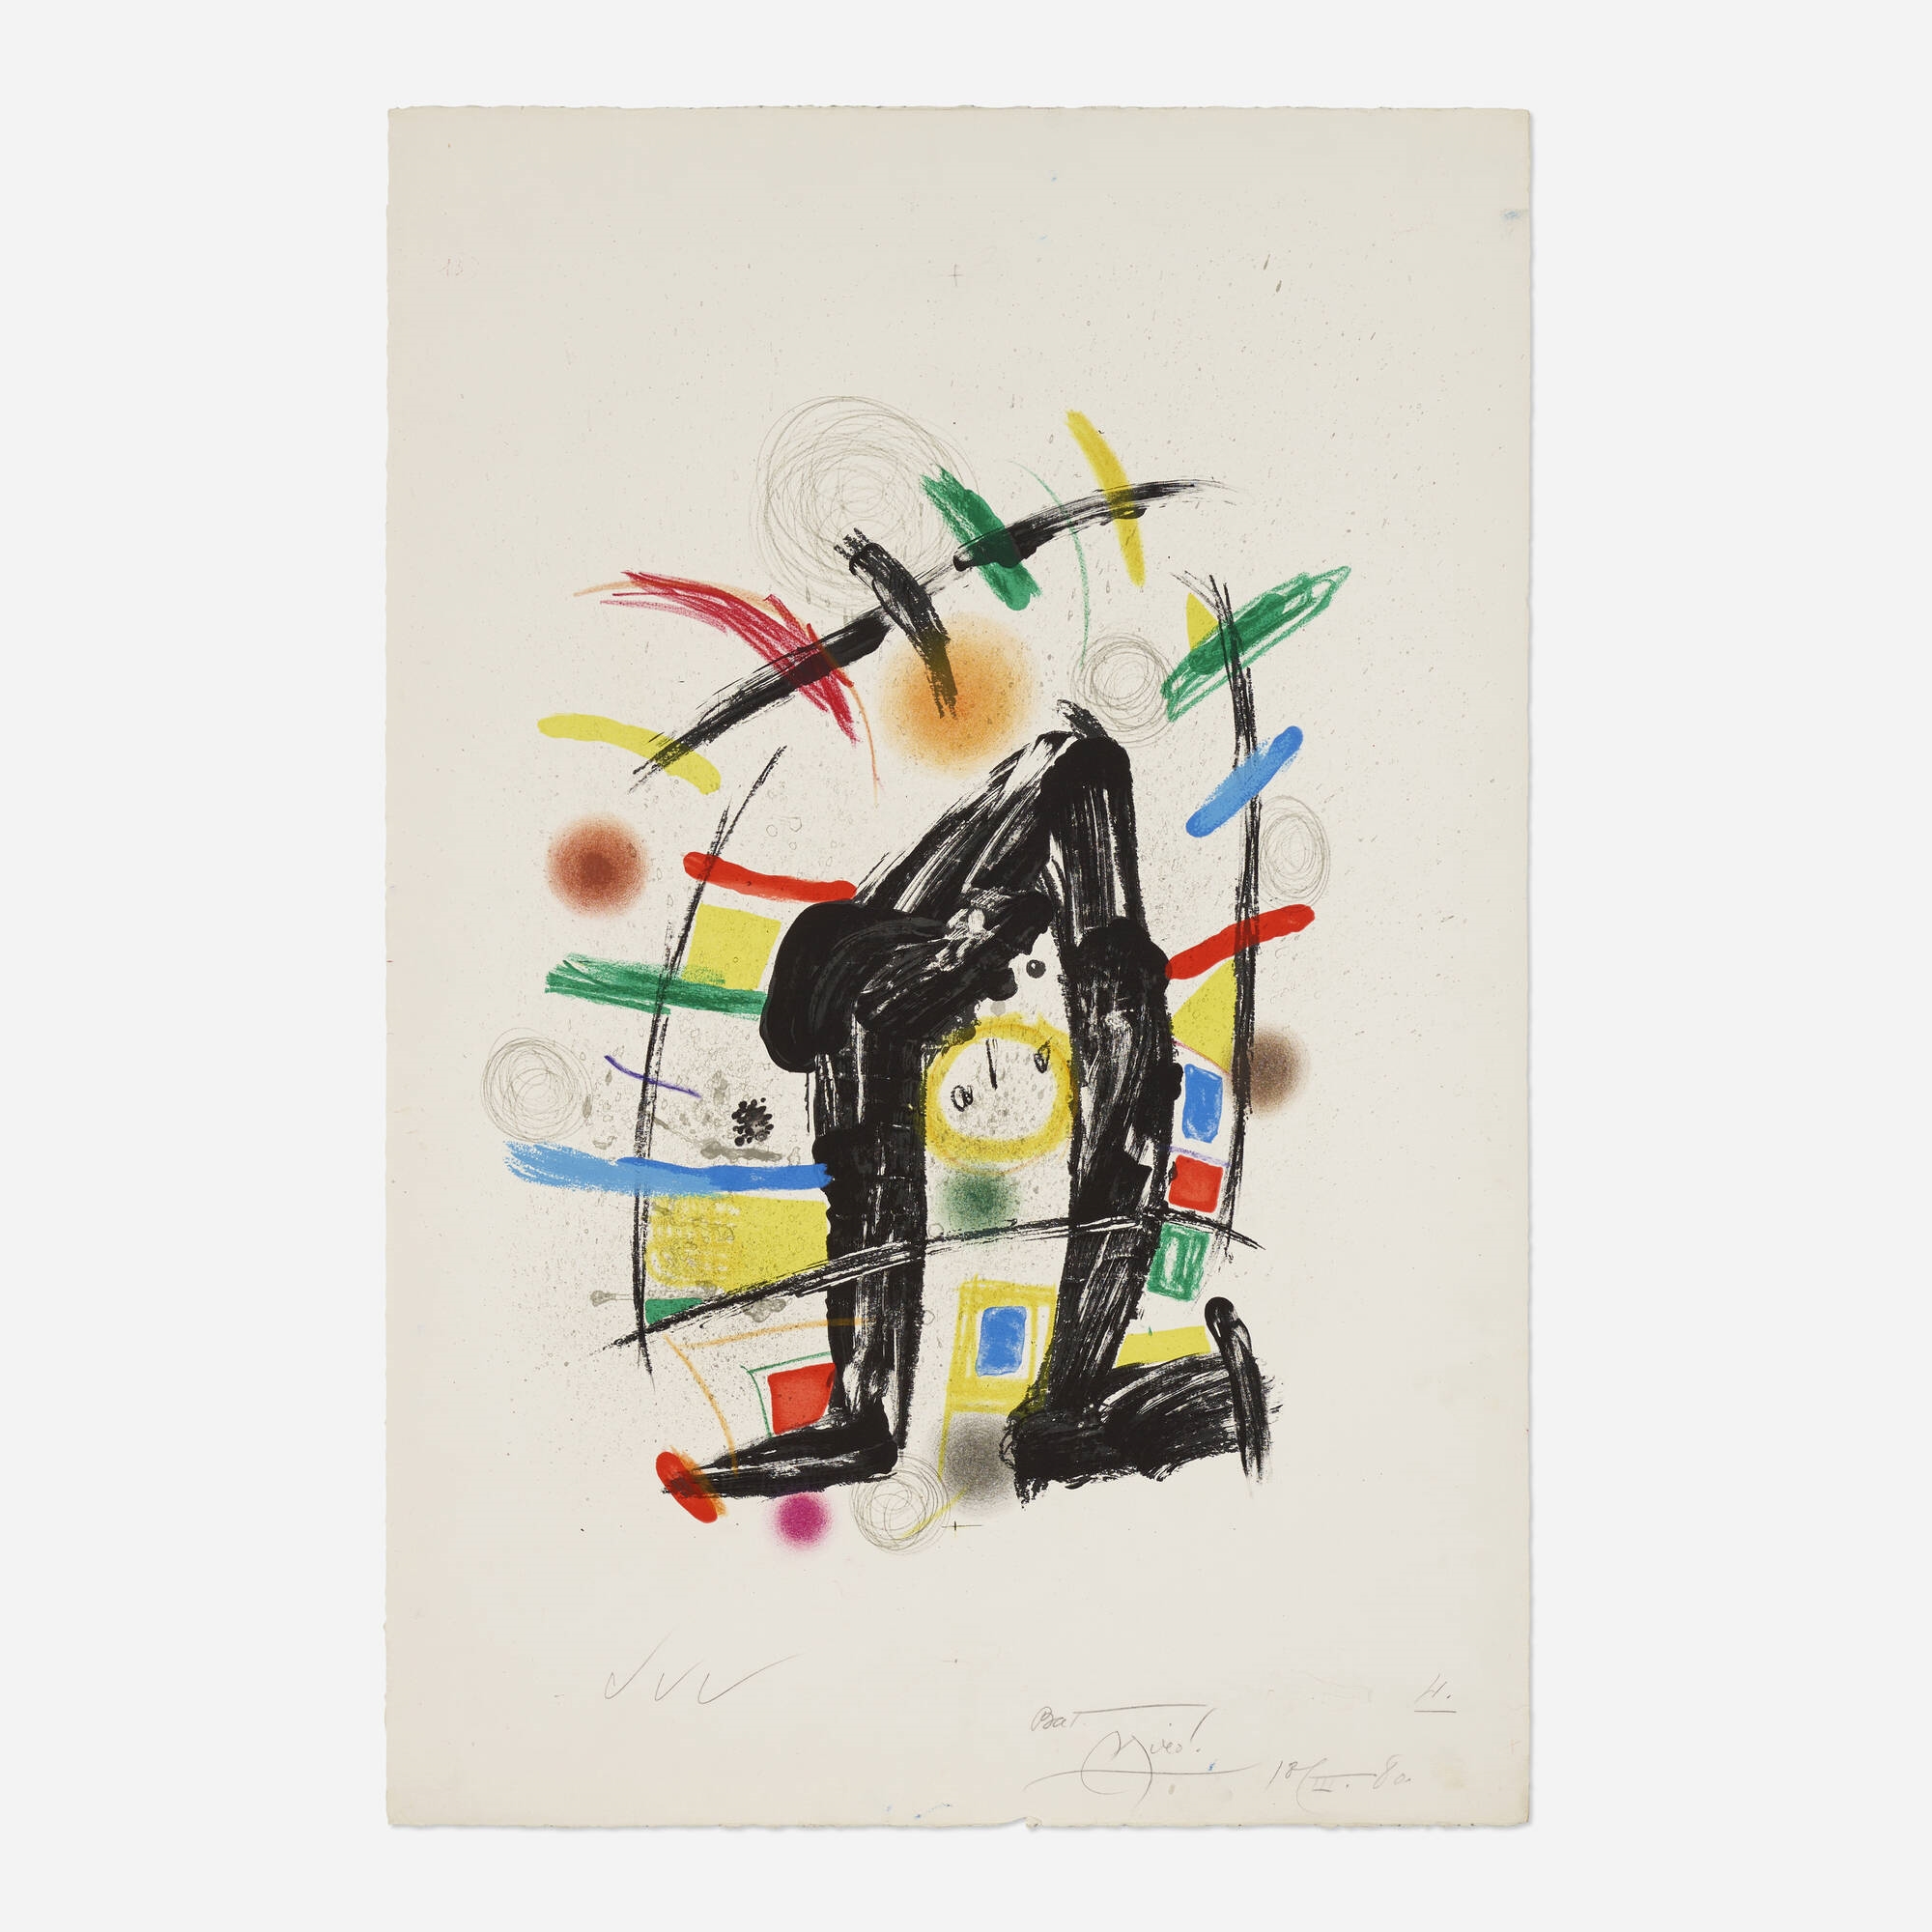 Malabarista by Joan Miró, 1980